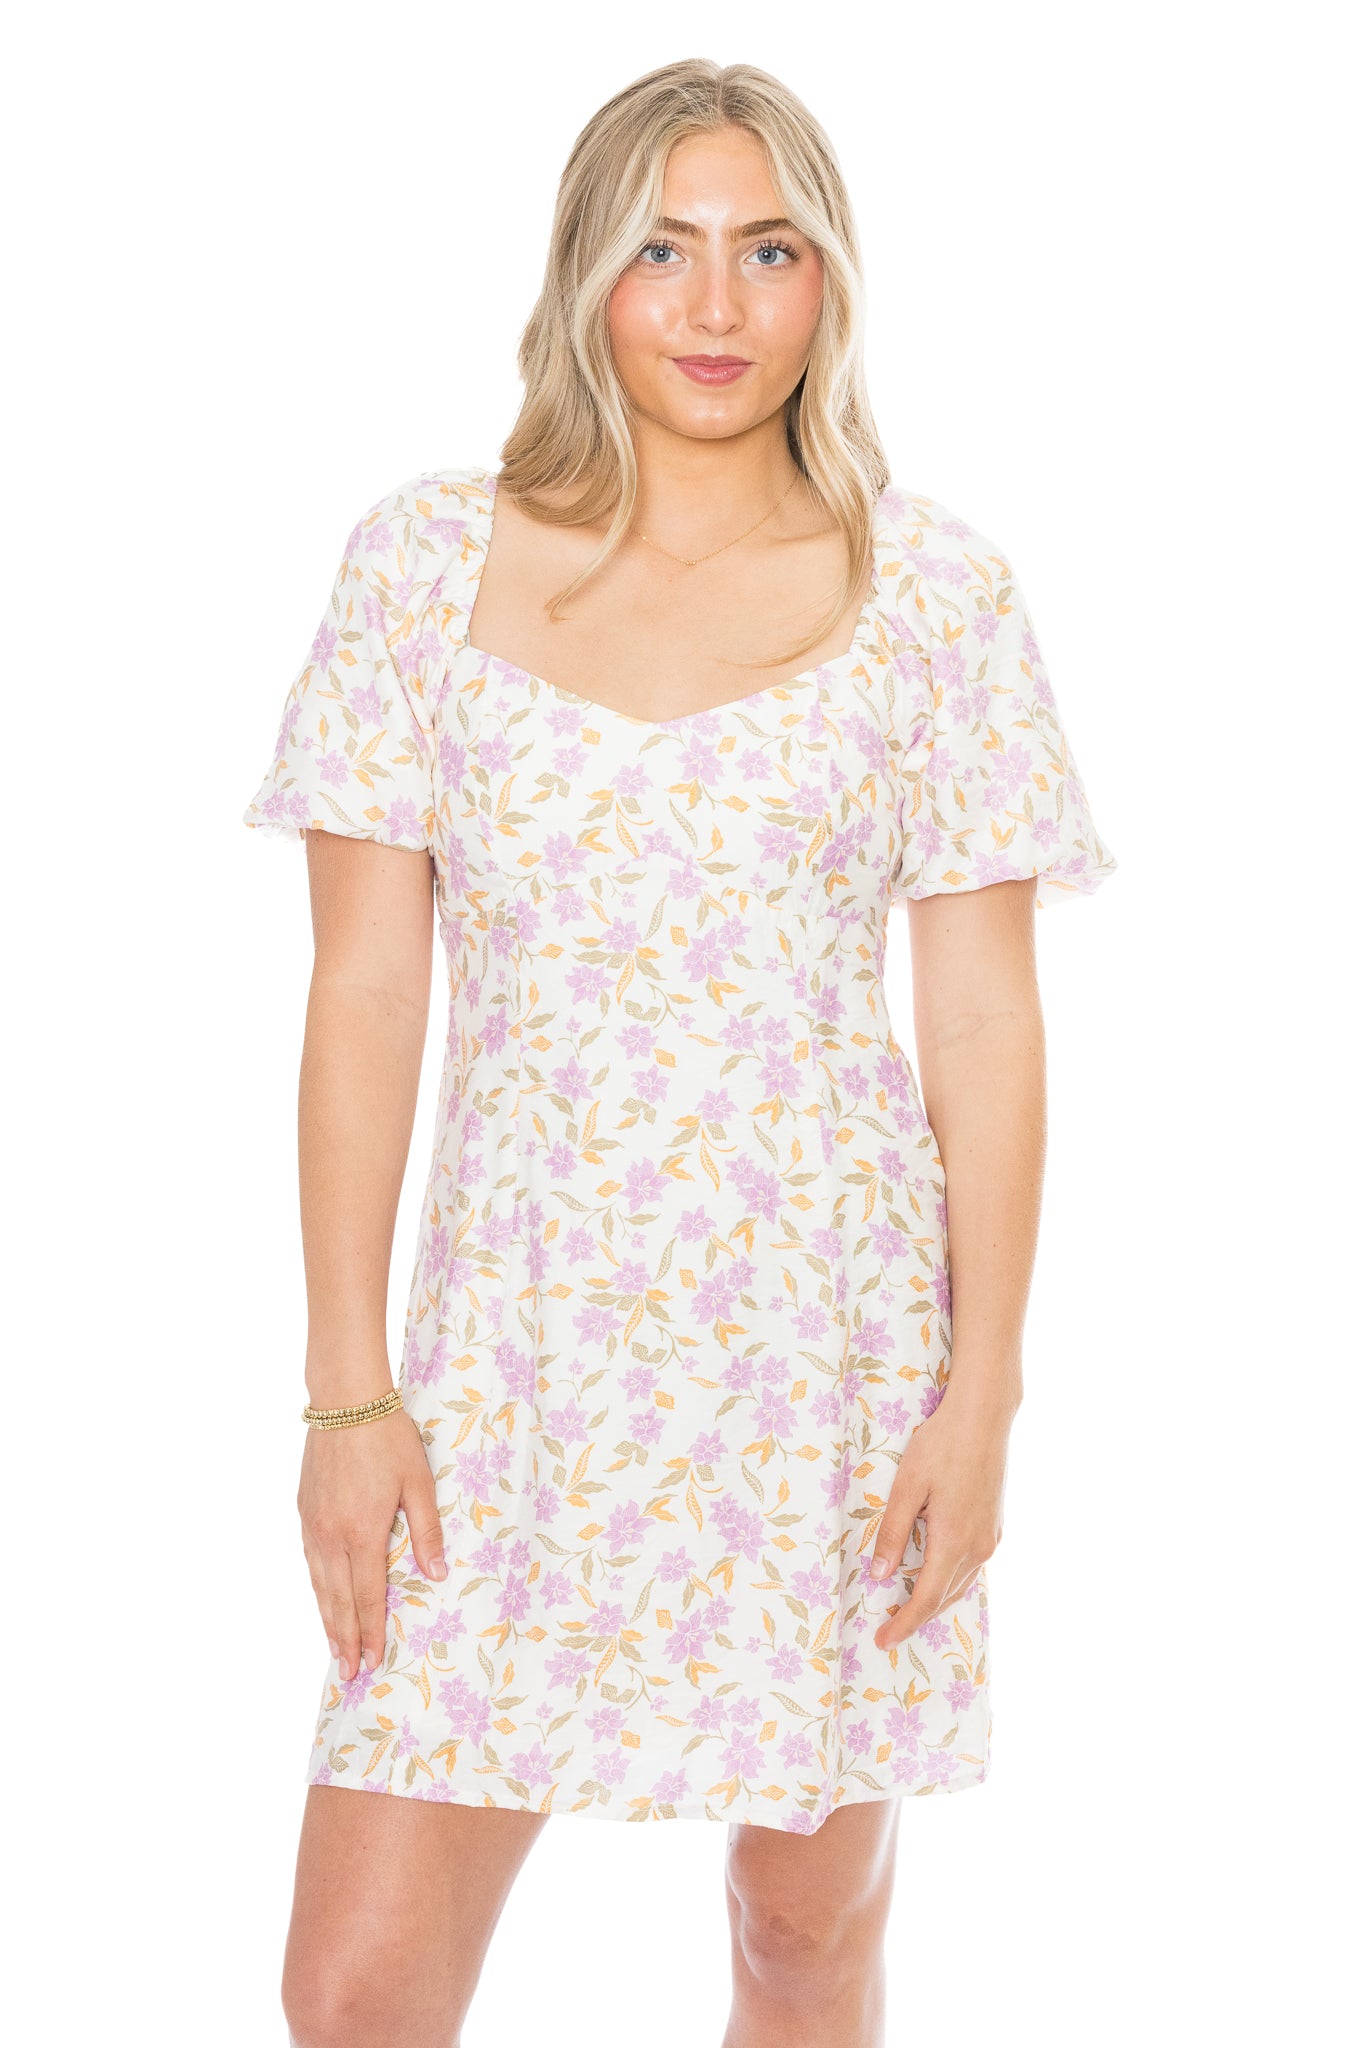 Alaine Floral Mini Dress by Z Supply